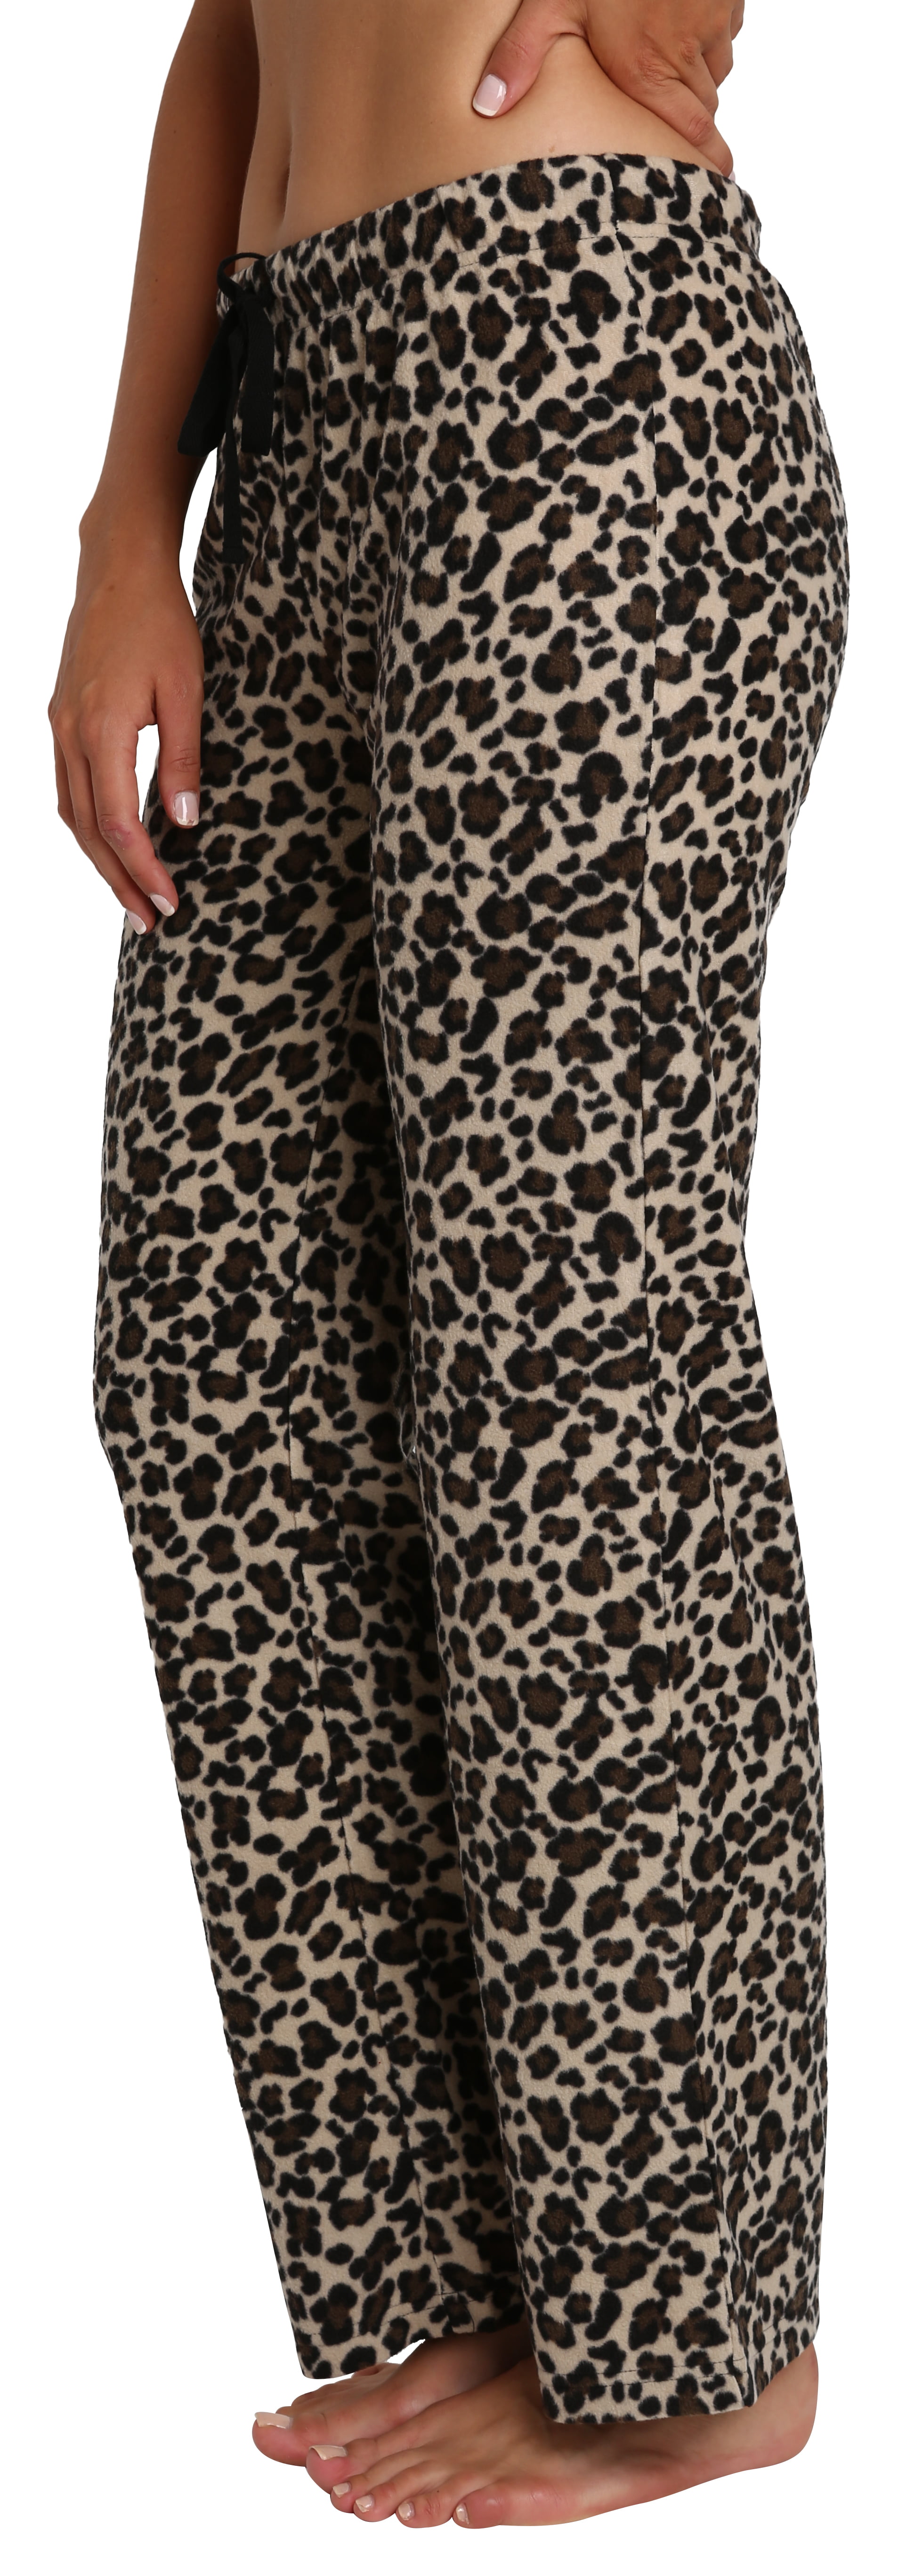 Blis Adult Womens Fuzzy Fleece Pajama Pants with Drawcord